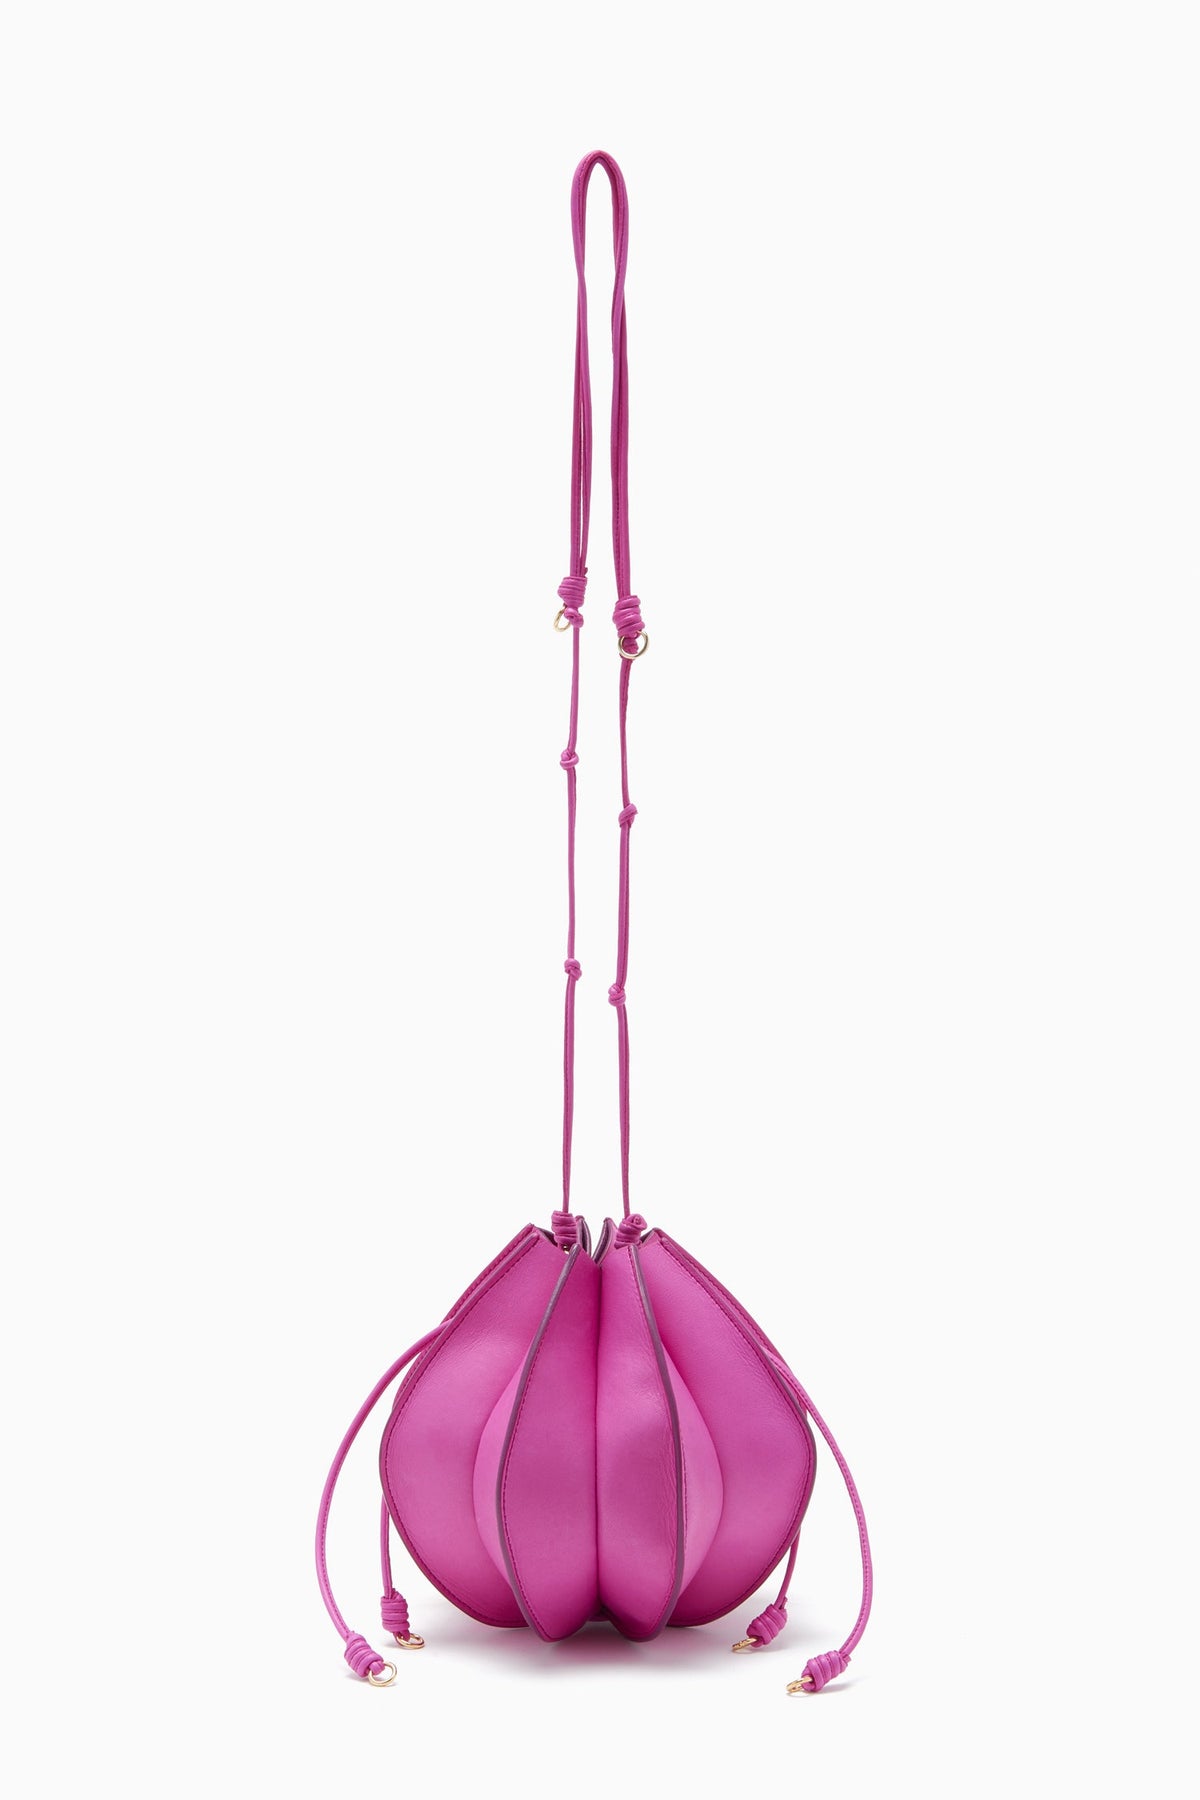 Ulla Johnson Lotus Flower Pochette Top-Handle Bag, Orchid Colorblock, Women's, Handbags & Purses Crossbody Bags & Camera Bags